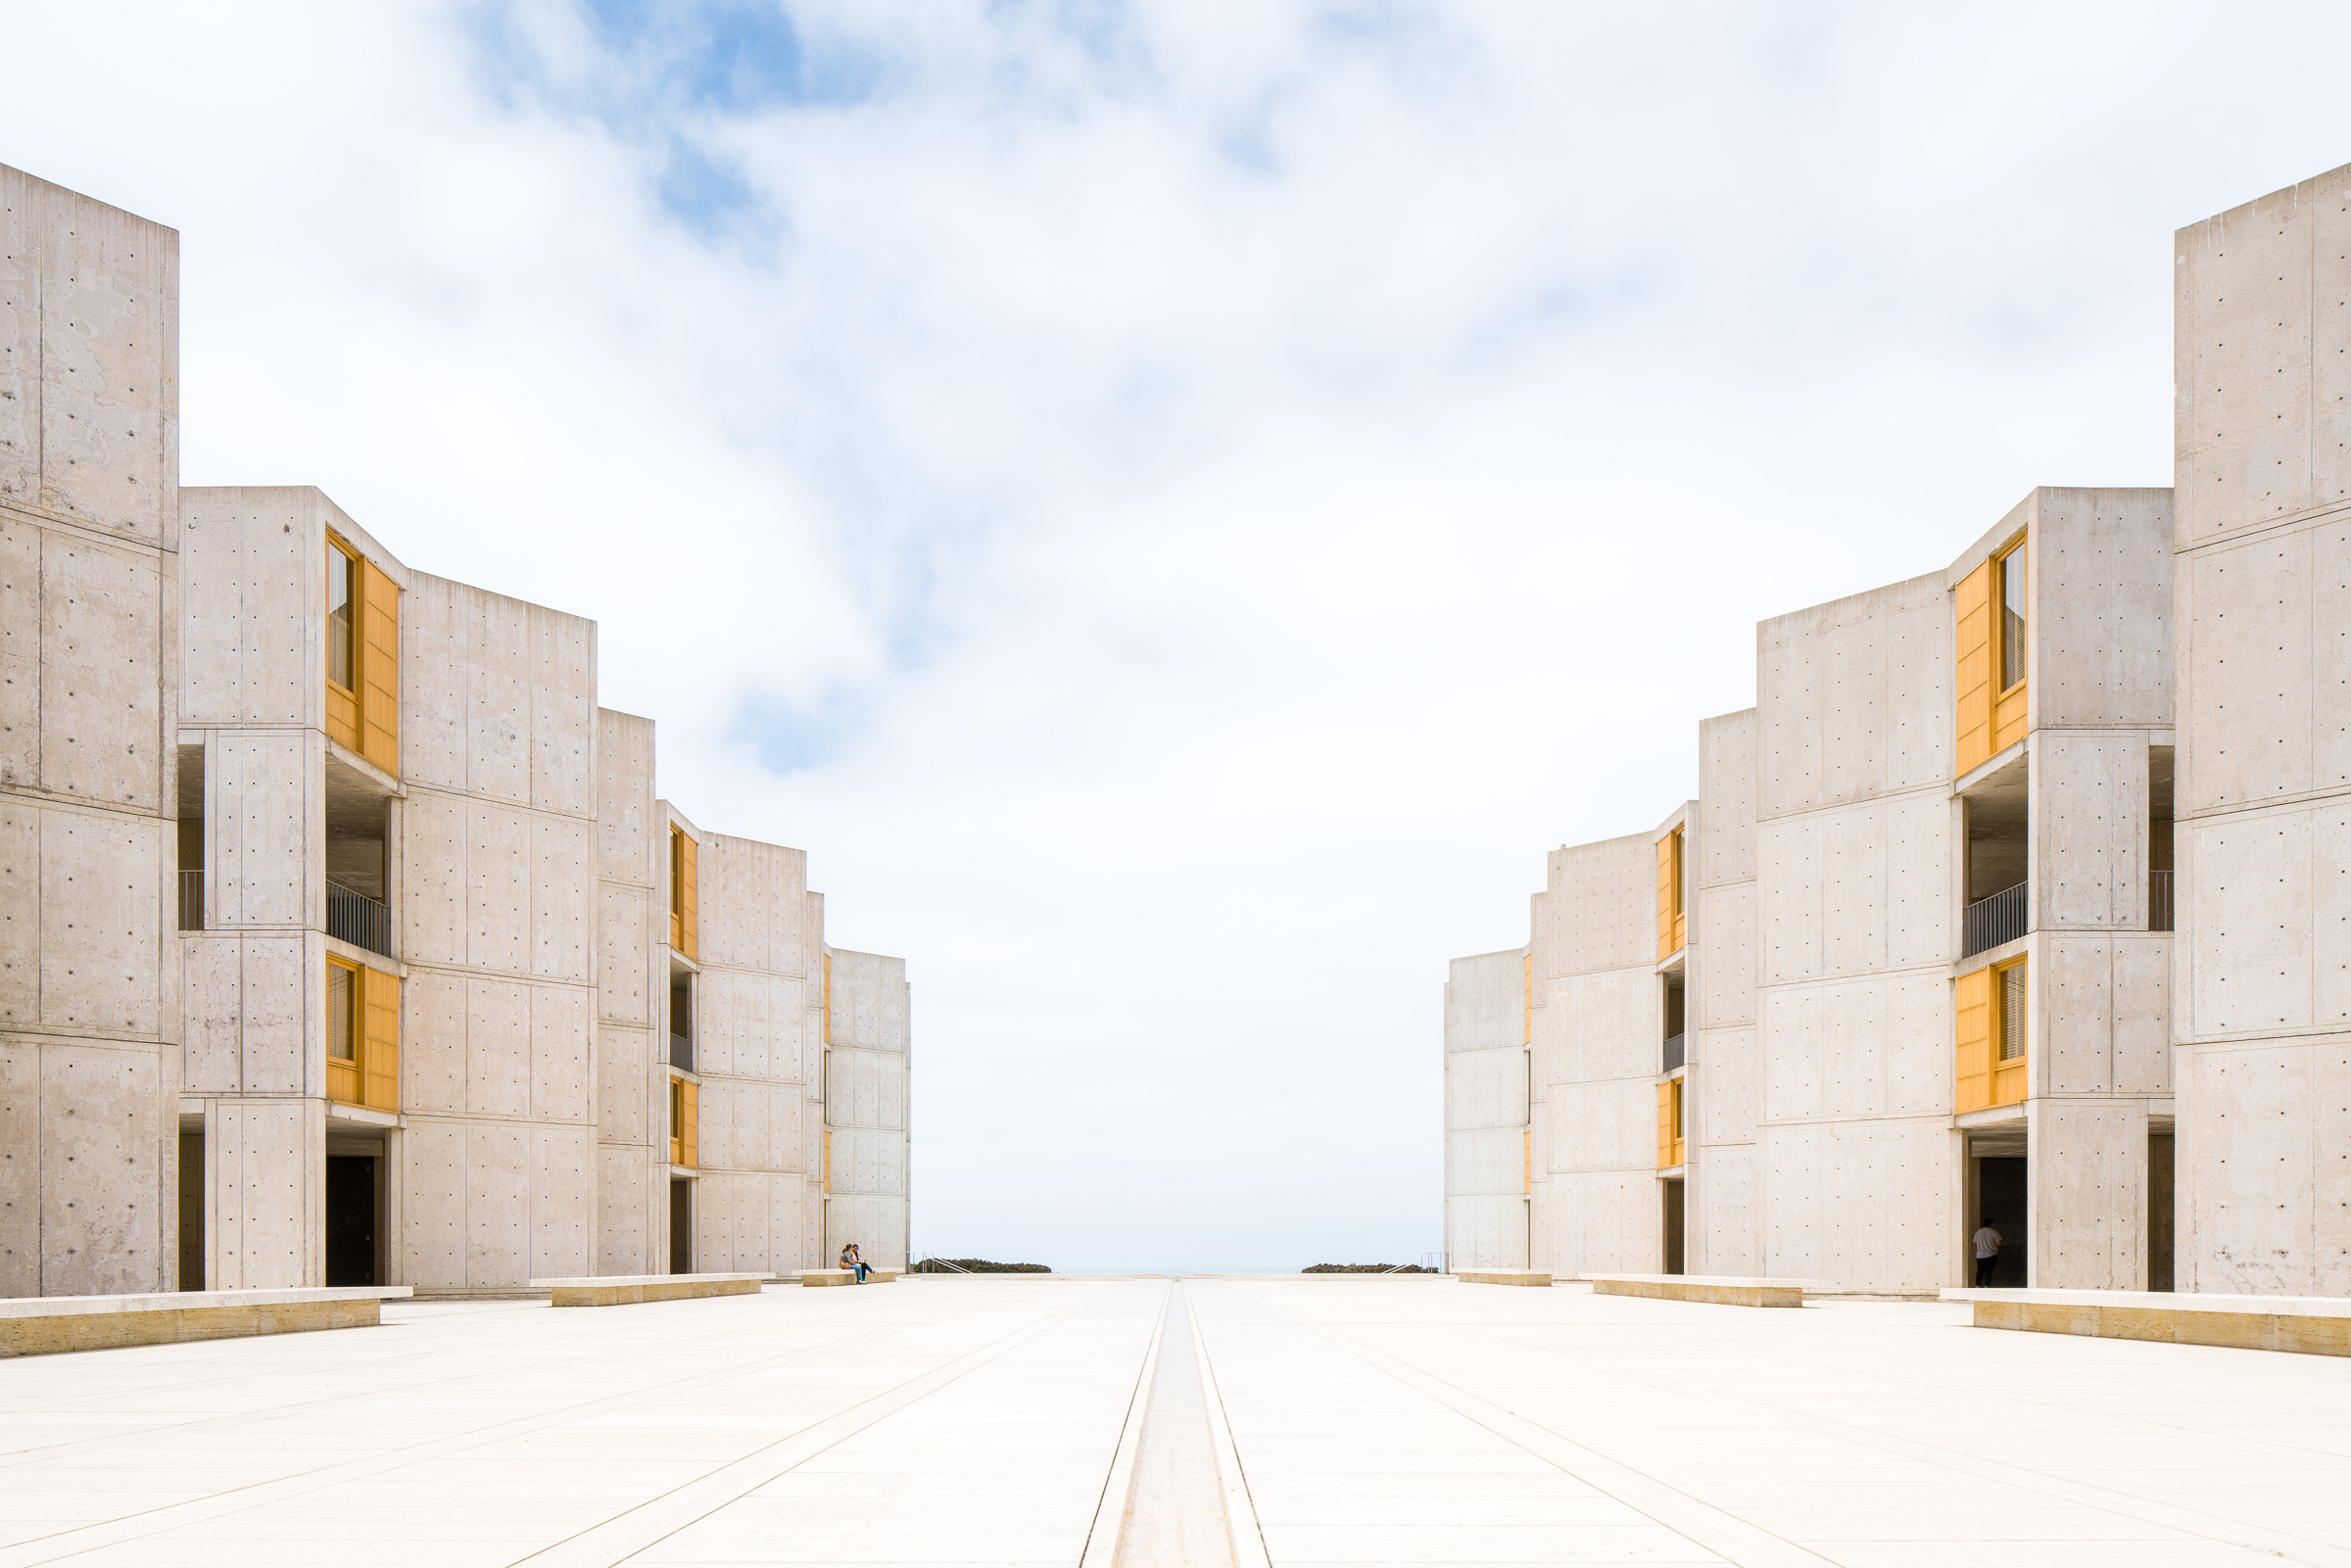 Picture/Photo: Salk Institute for biological studies designed by Louis Kahn,  morning. La Jolla, San Diego, California, USA